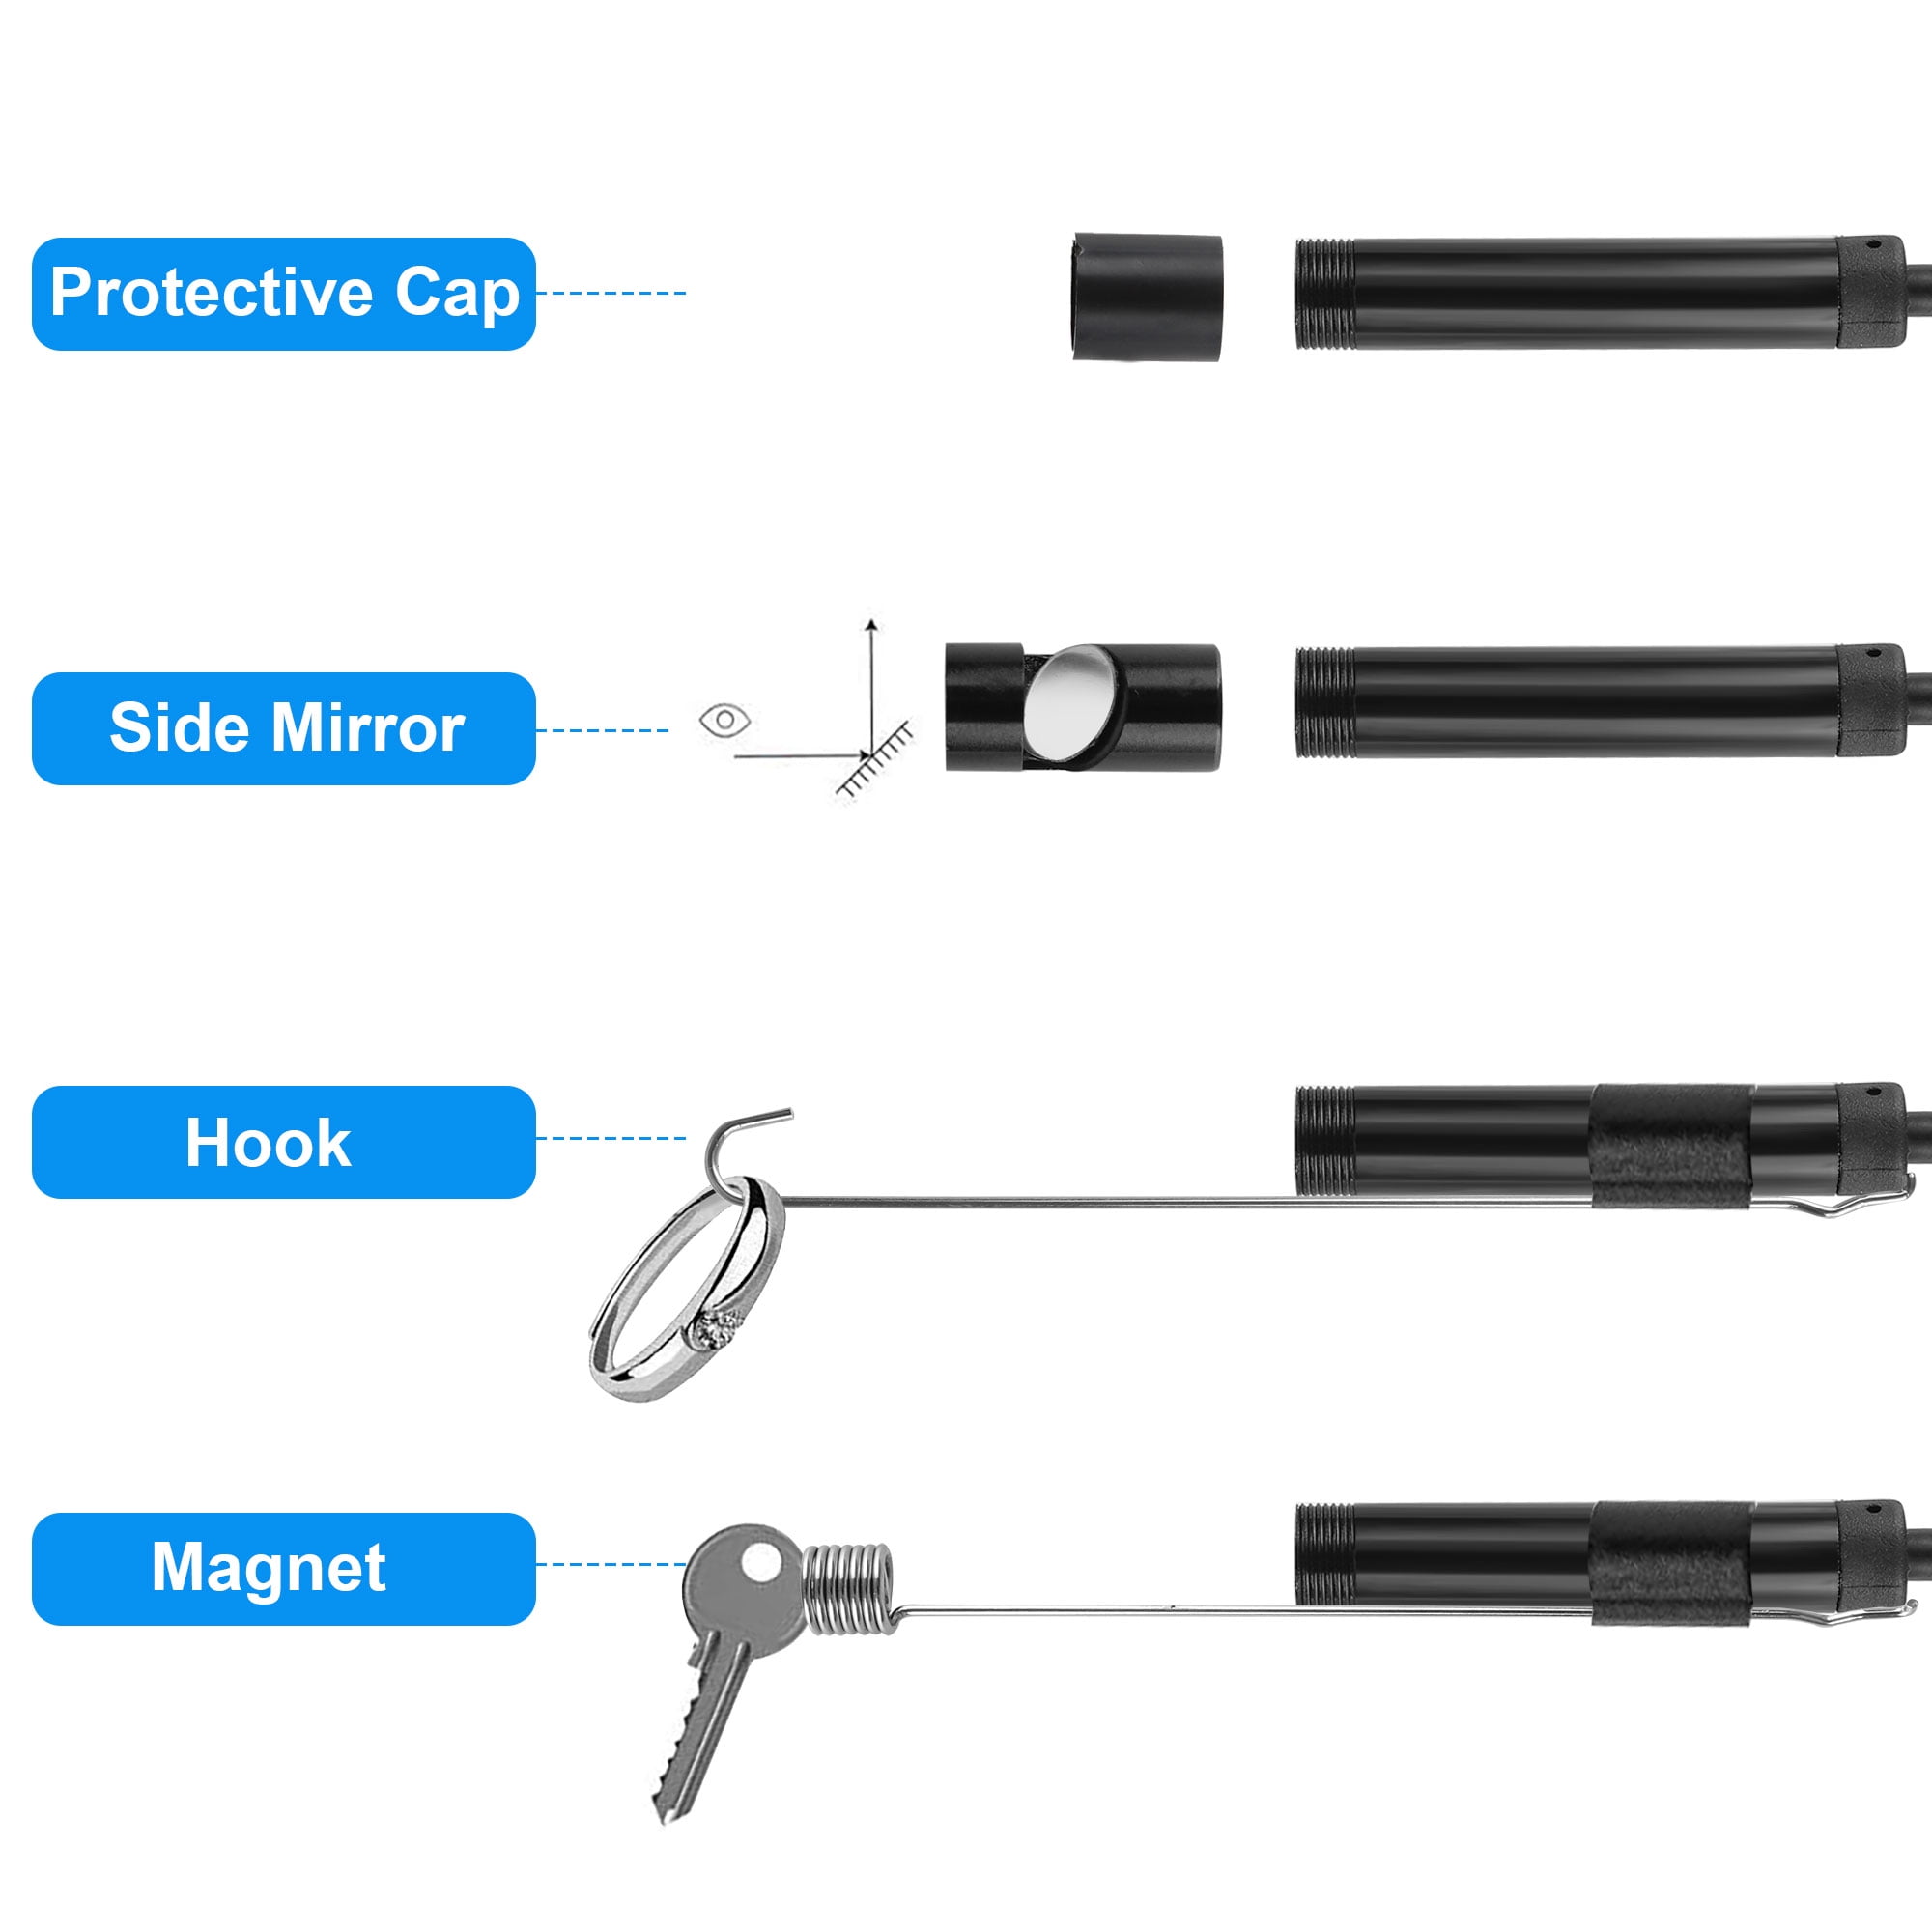 USB Endoscope, 20M-8.5HD 1280 * 720 Pixels Endoscope Inspection Camera 3 in  1 Industrial Borescope Inspection Camera Waterproof 6 LED Light Snake